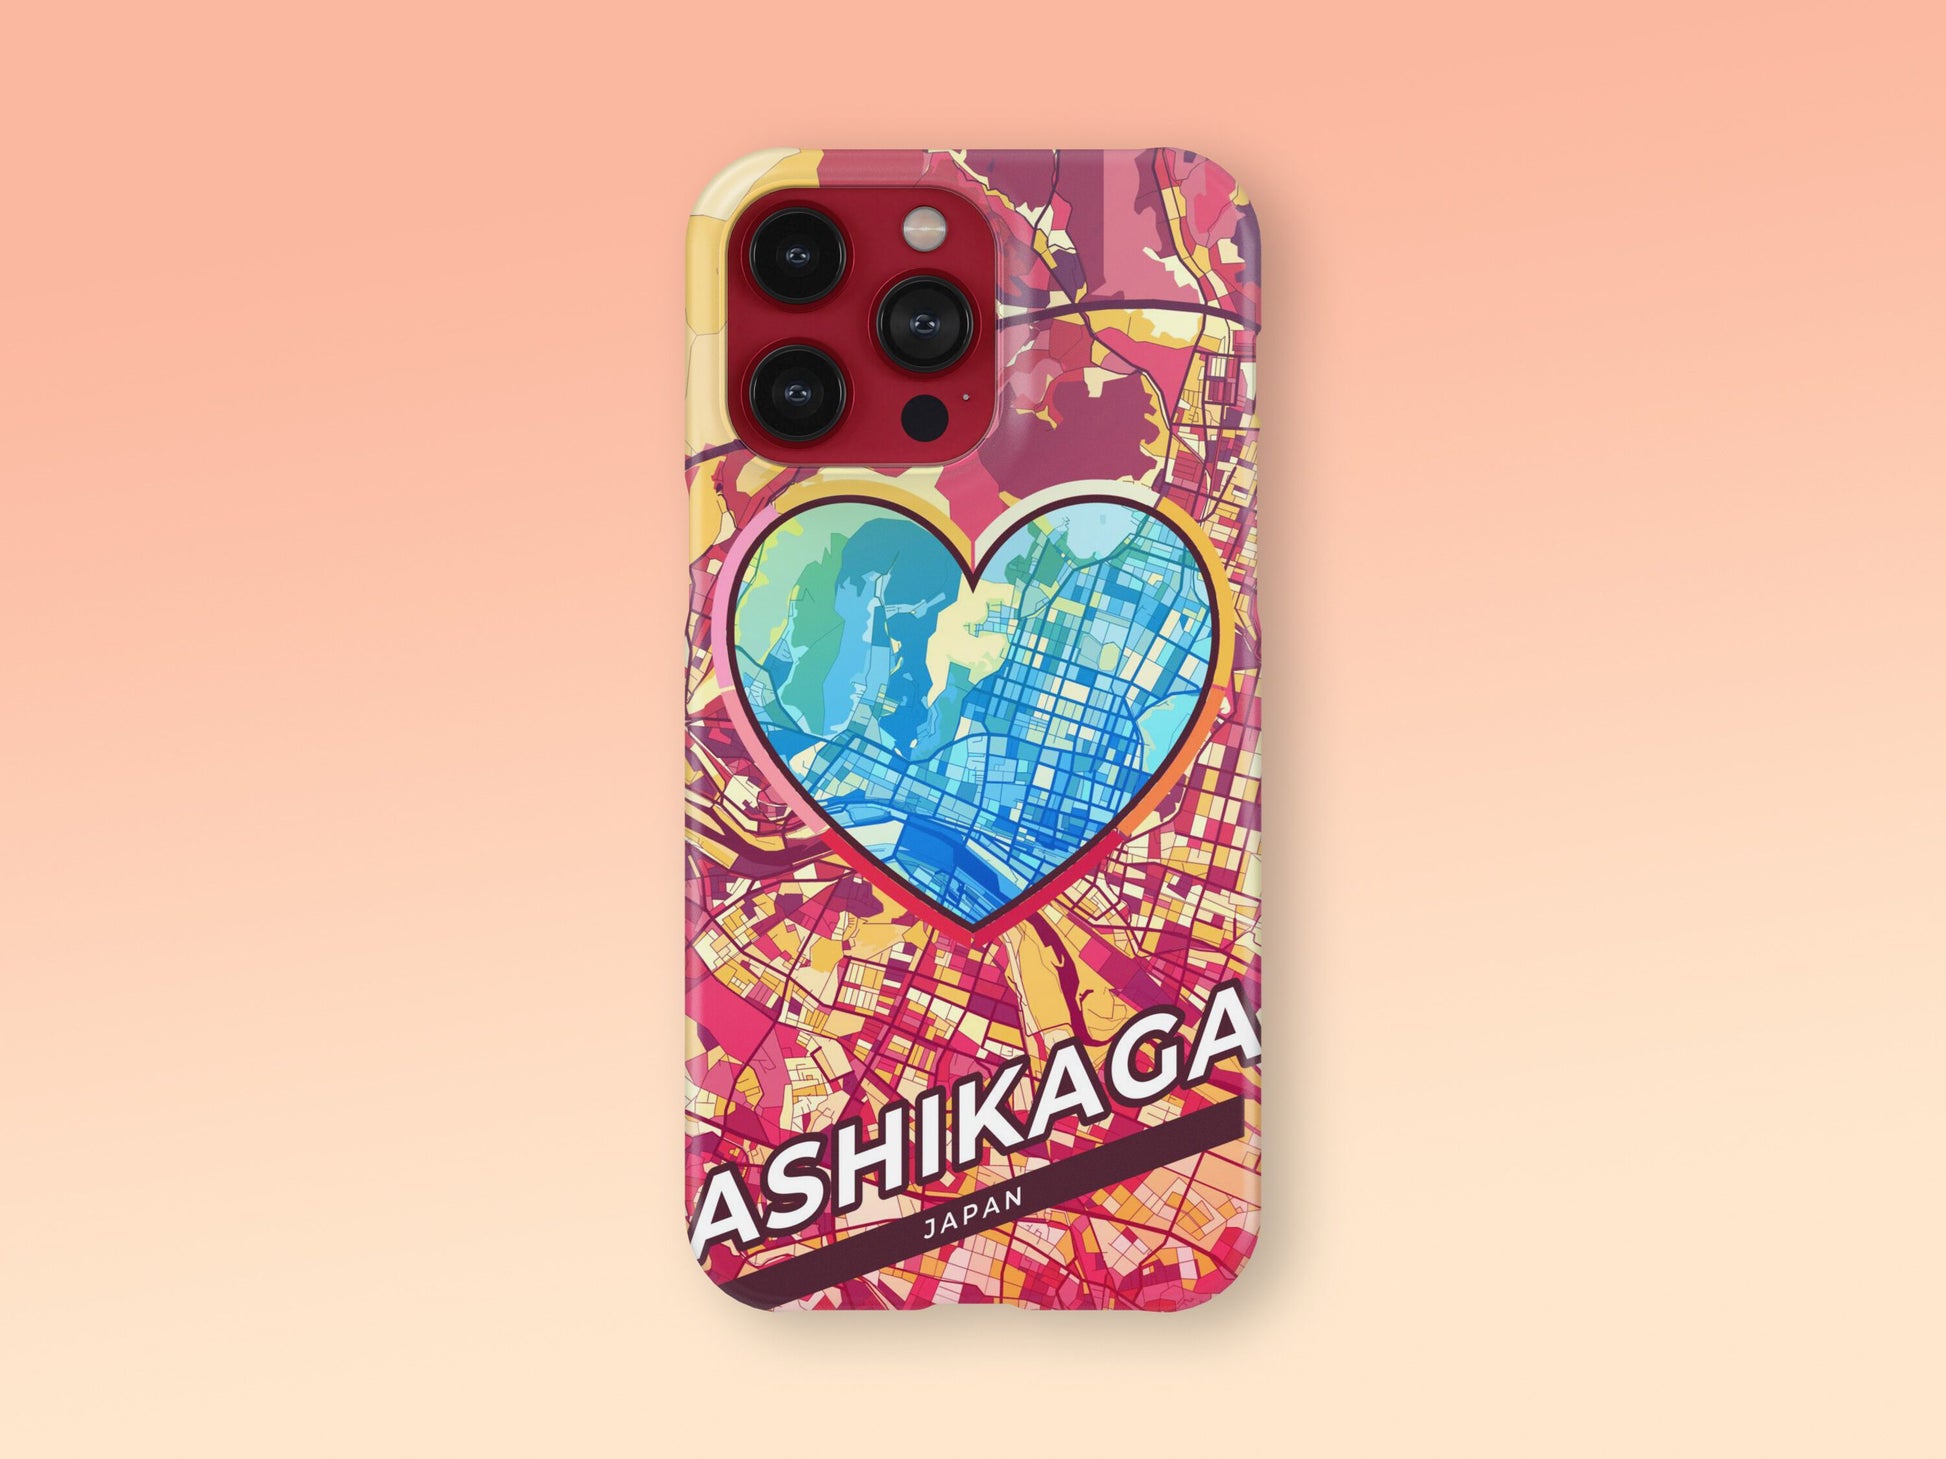 Ashikaga Japan slim phone case with colorful icon. Birthday, wedding or housewarming gift. Couple match cases. 2